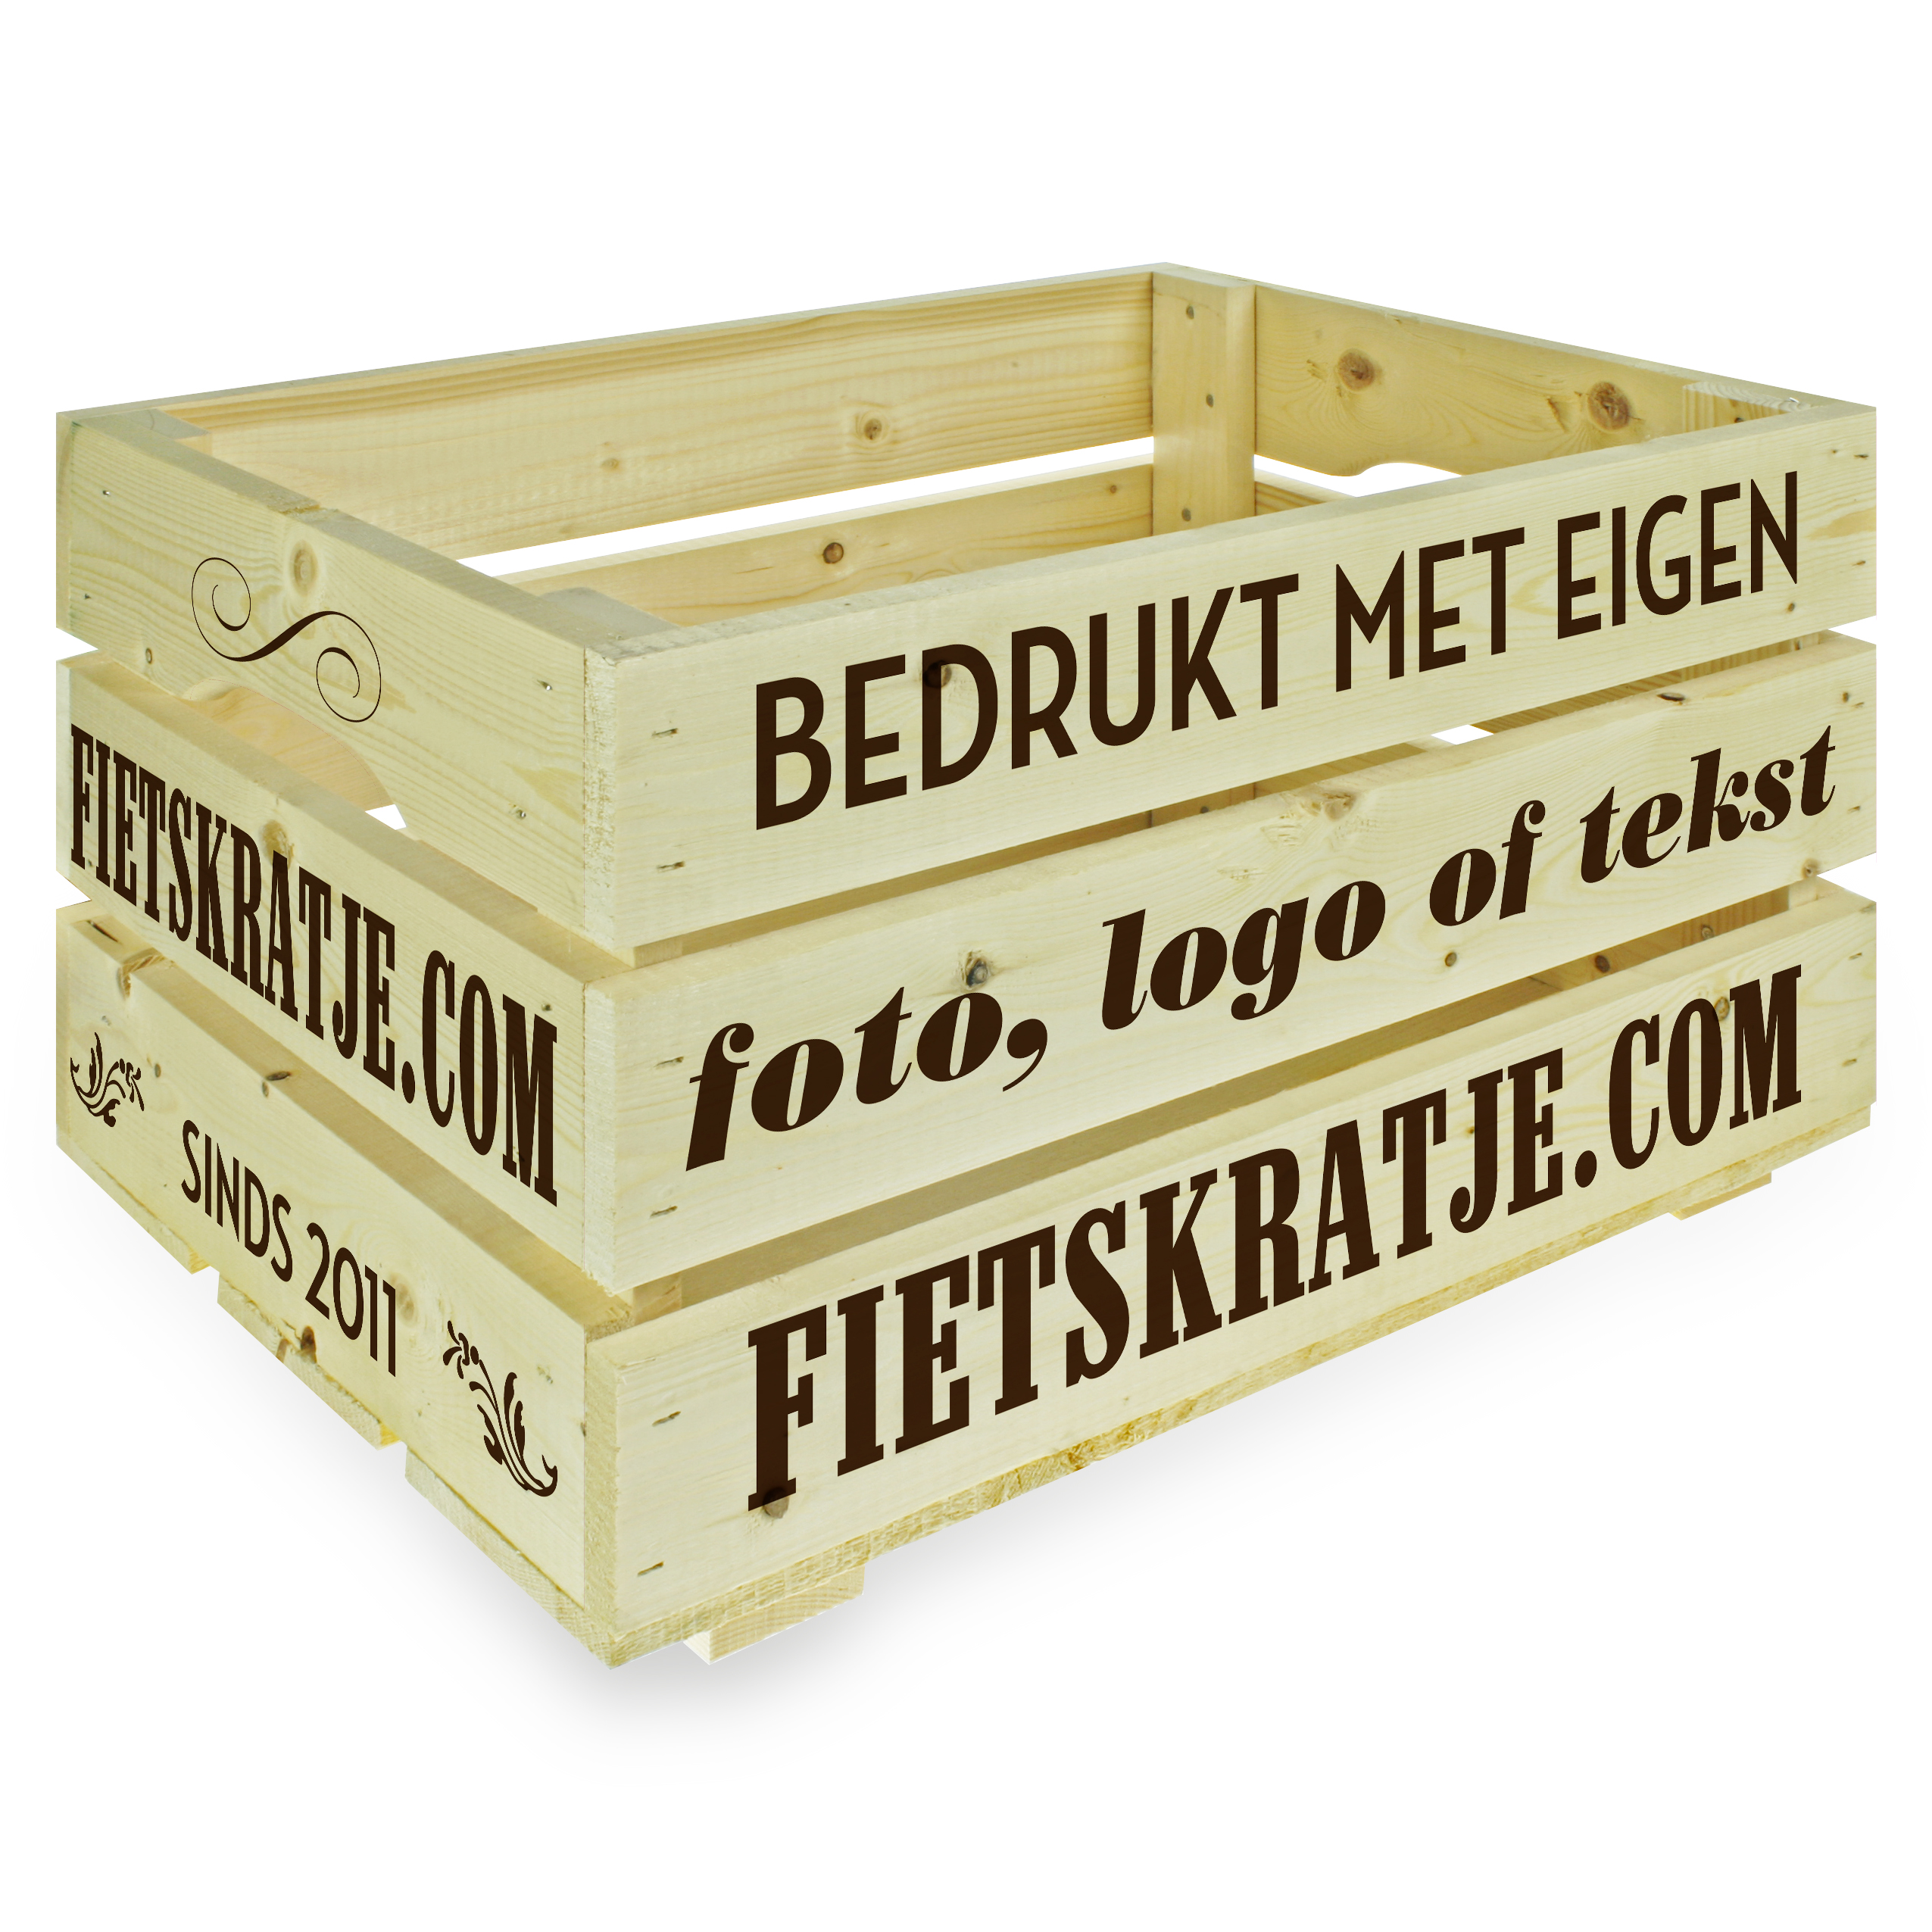 'Fietskratje.com'